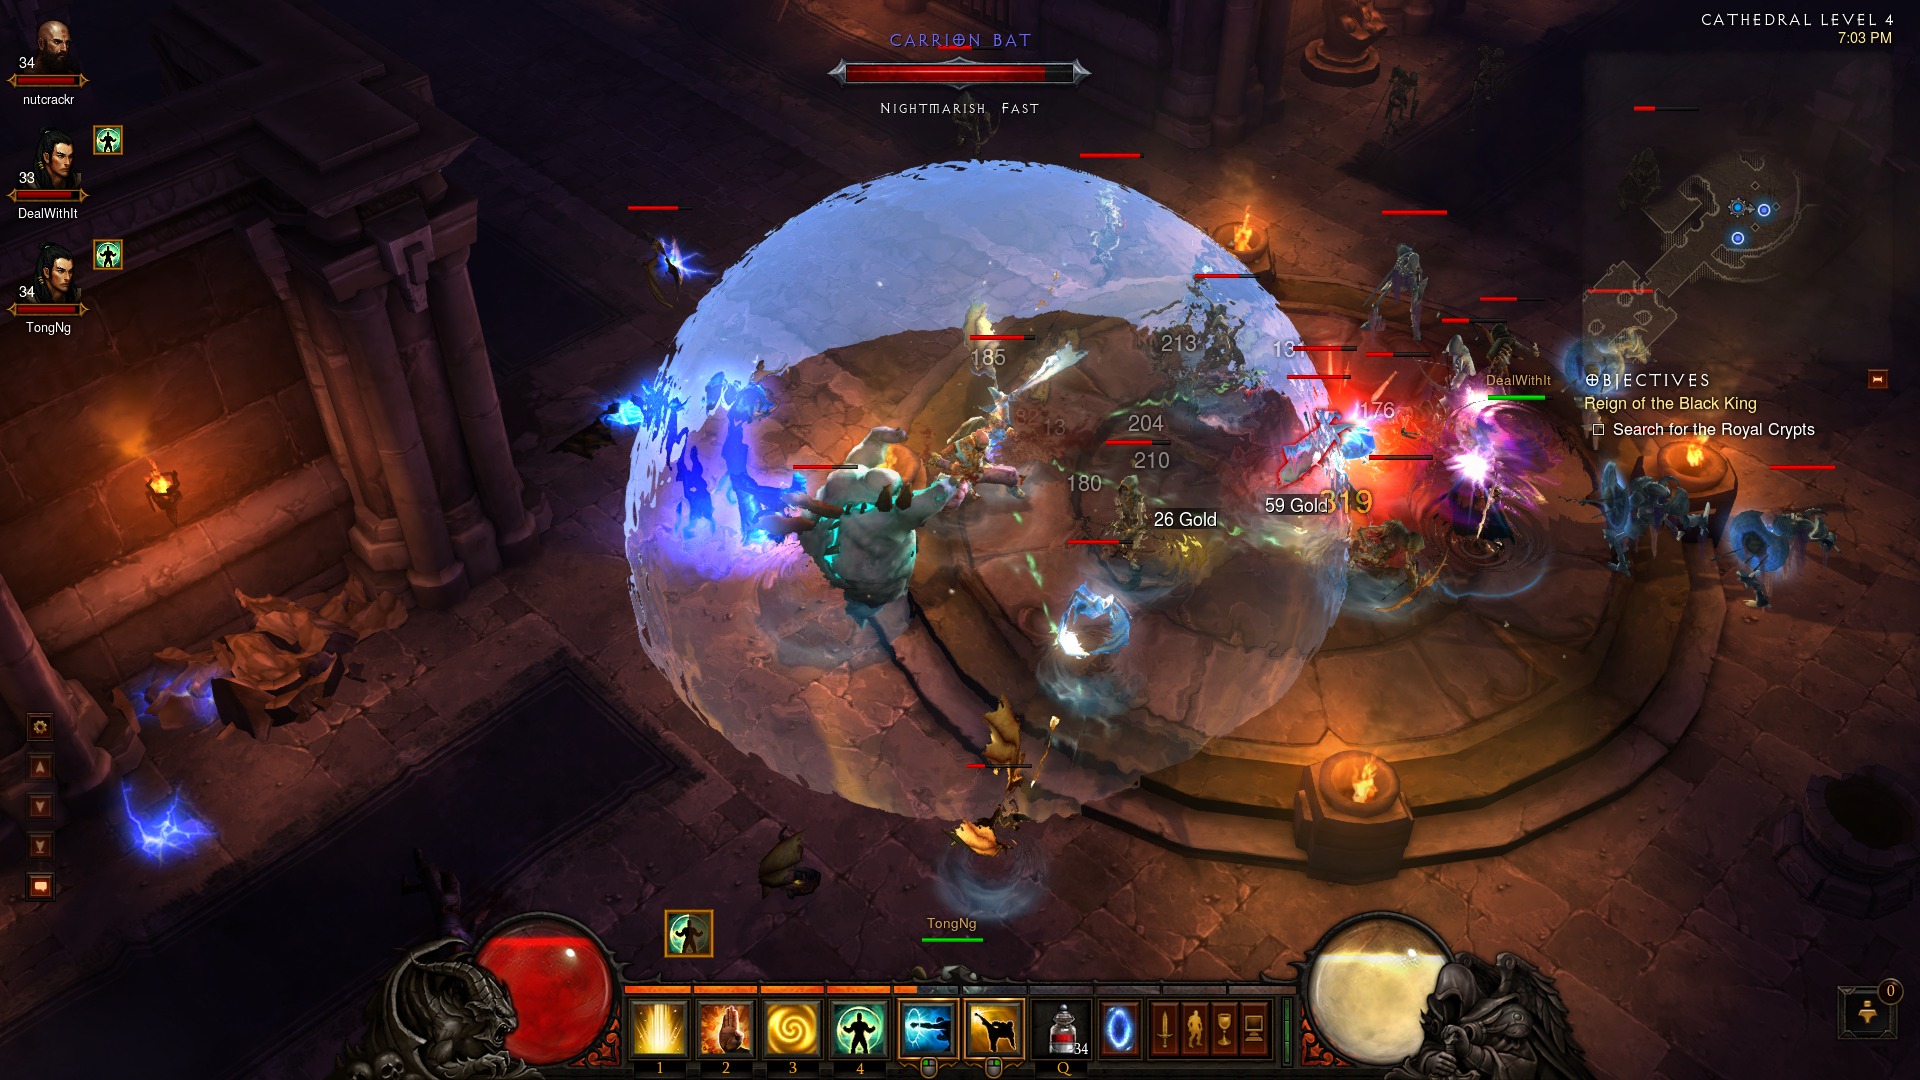 Screenshot da tela de gameplays: A. Diablo 3, B. Doom, C. League of